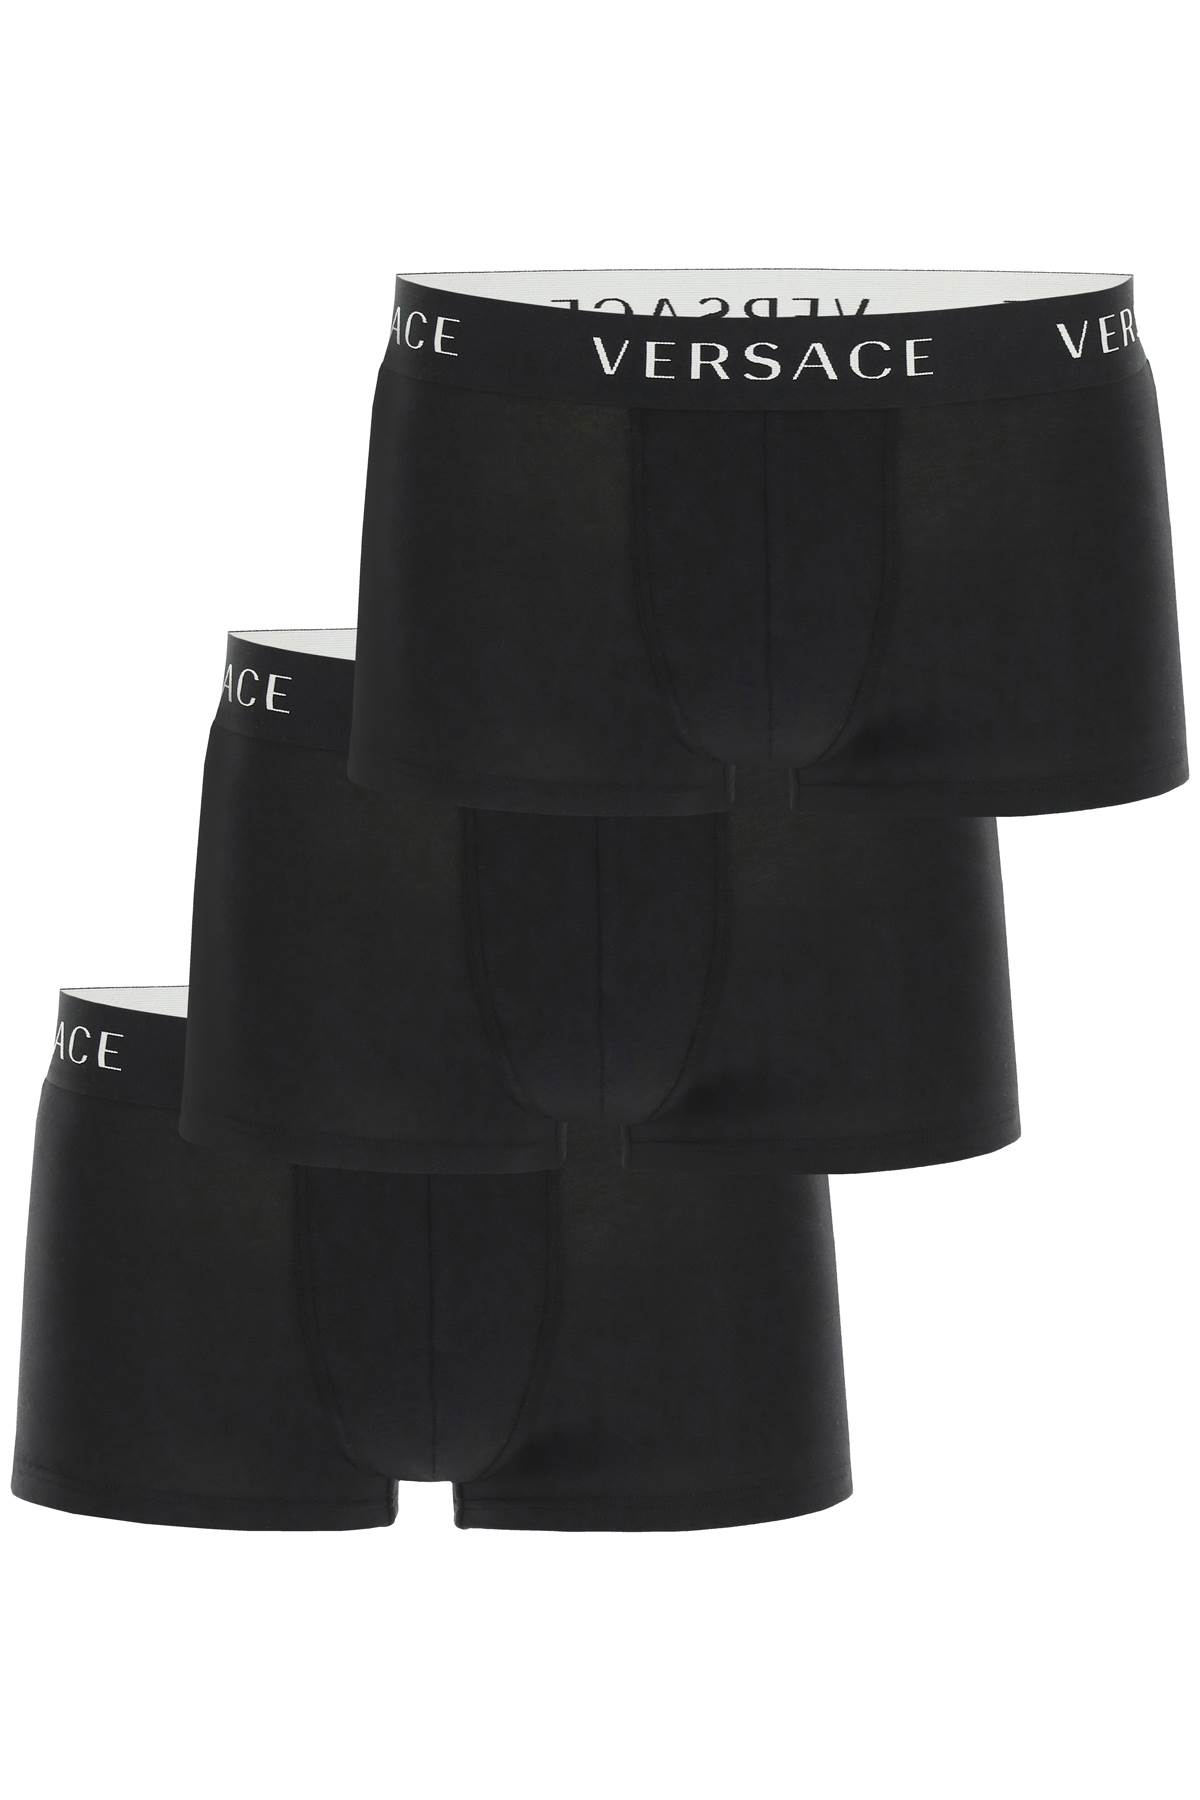 Versace Tri-pack Trunks